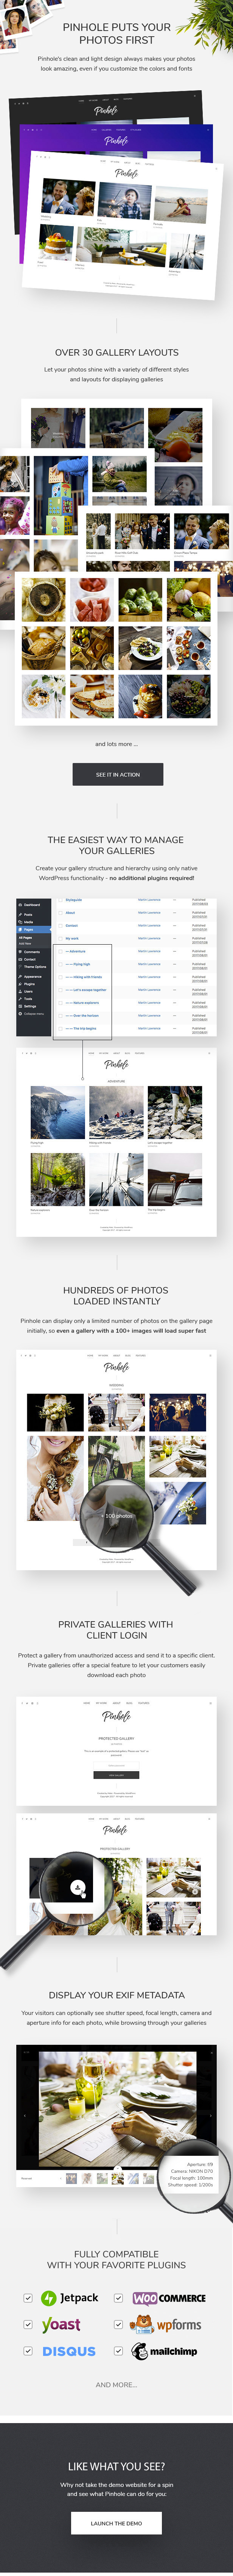 Pinhole - WordPress Gallery Theme for Photographers 1